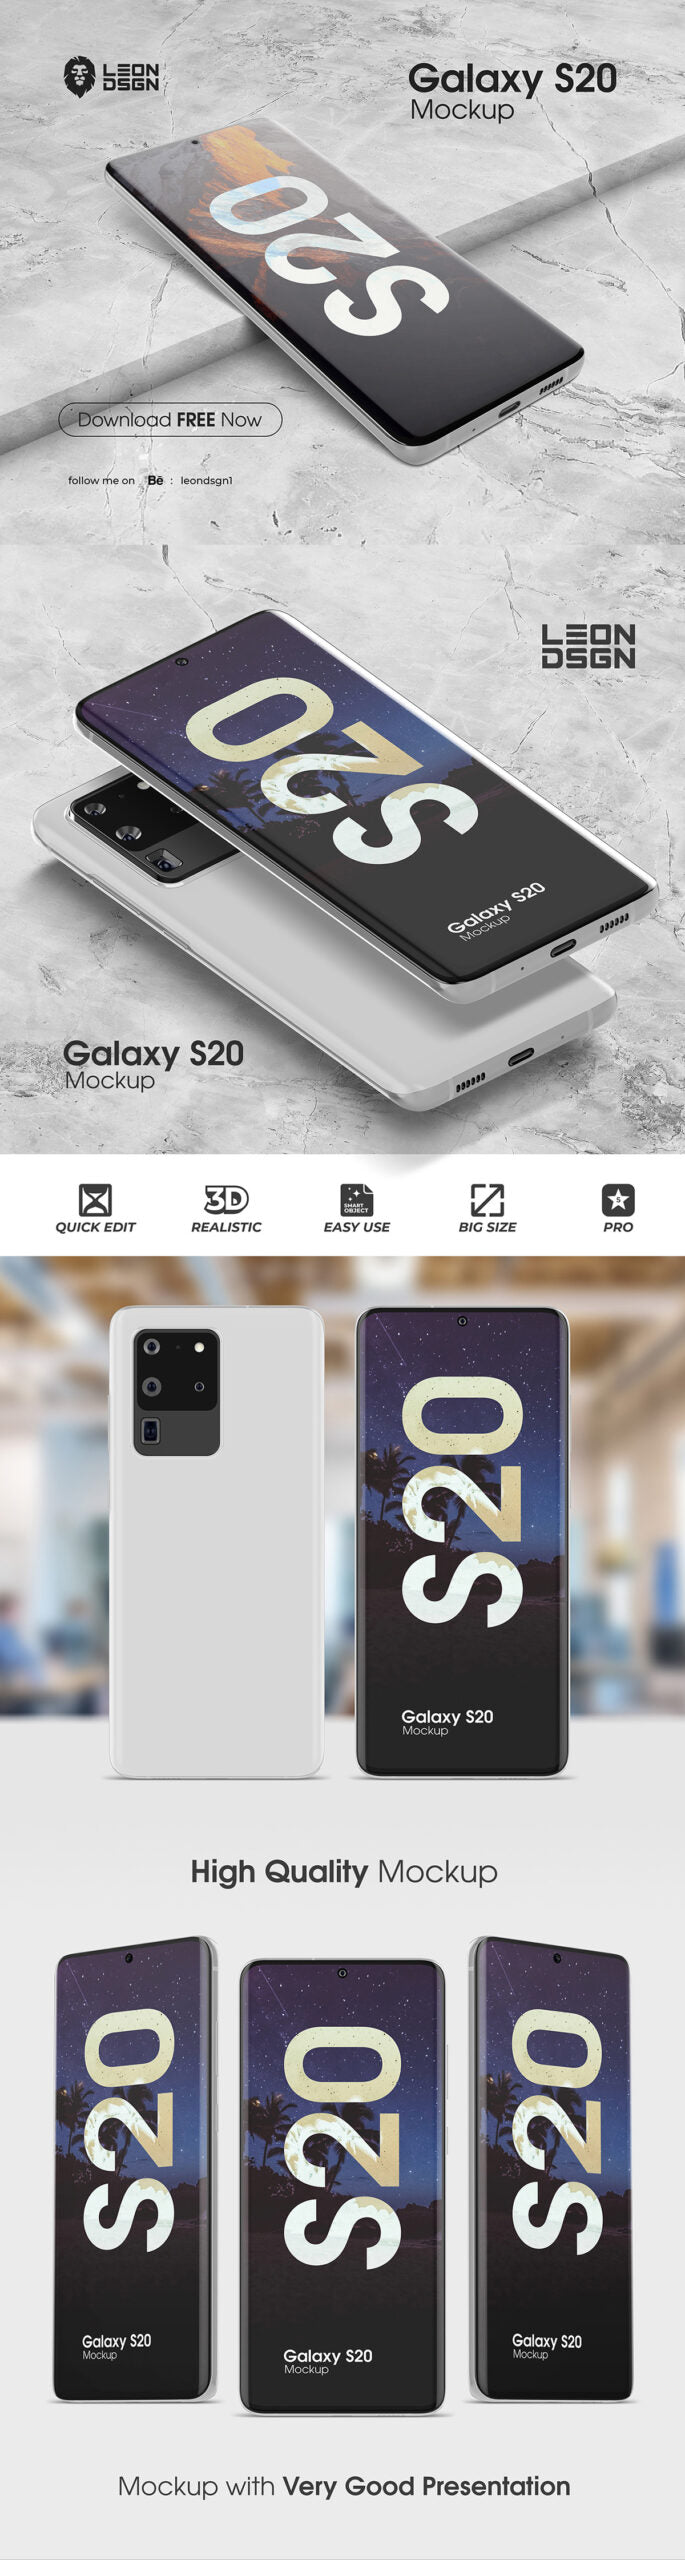 Free Samsung Galaxy S20 Device Mockup